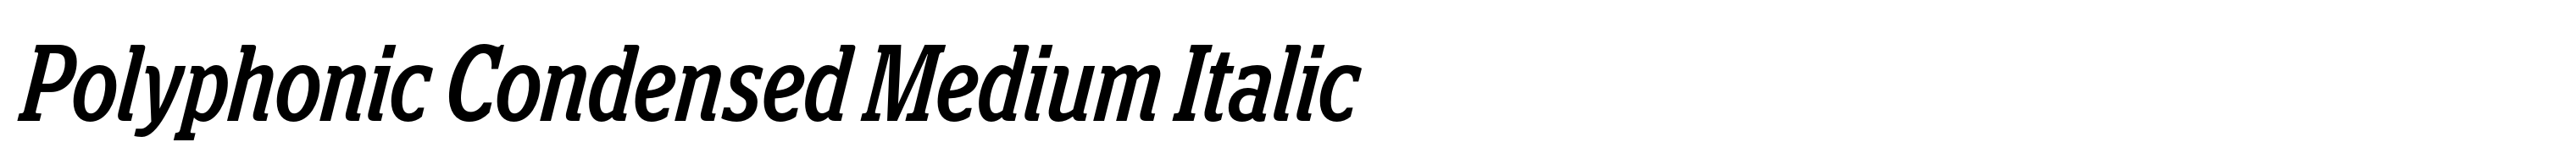 Polyphonic Condensed Medium Italic